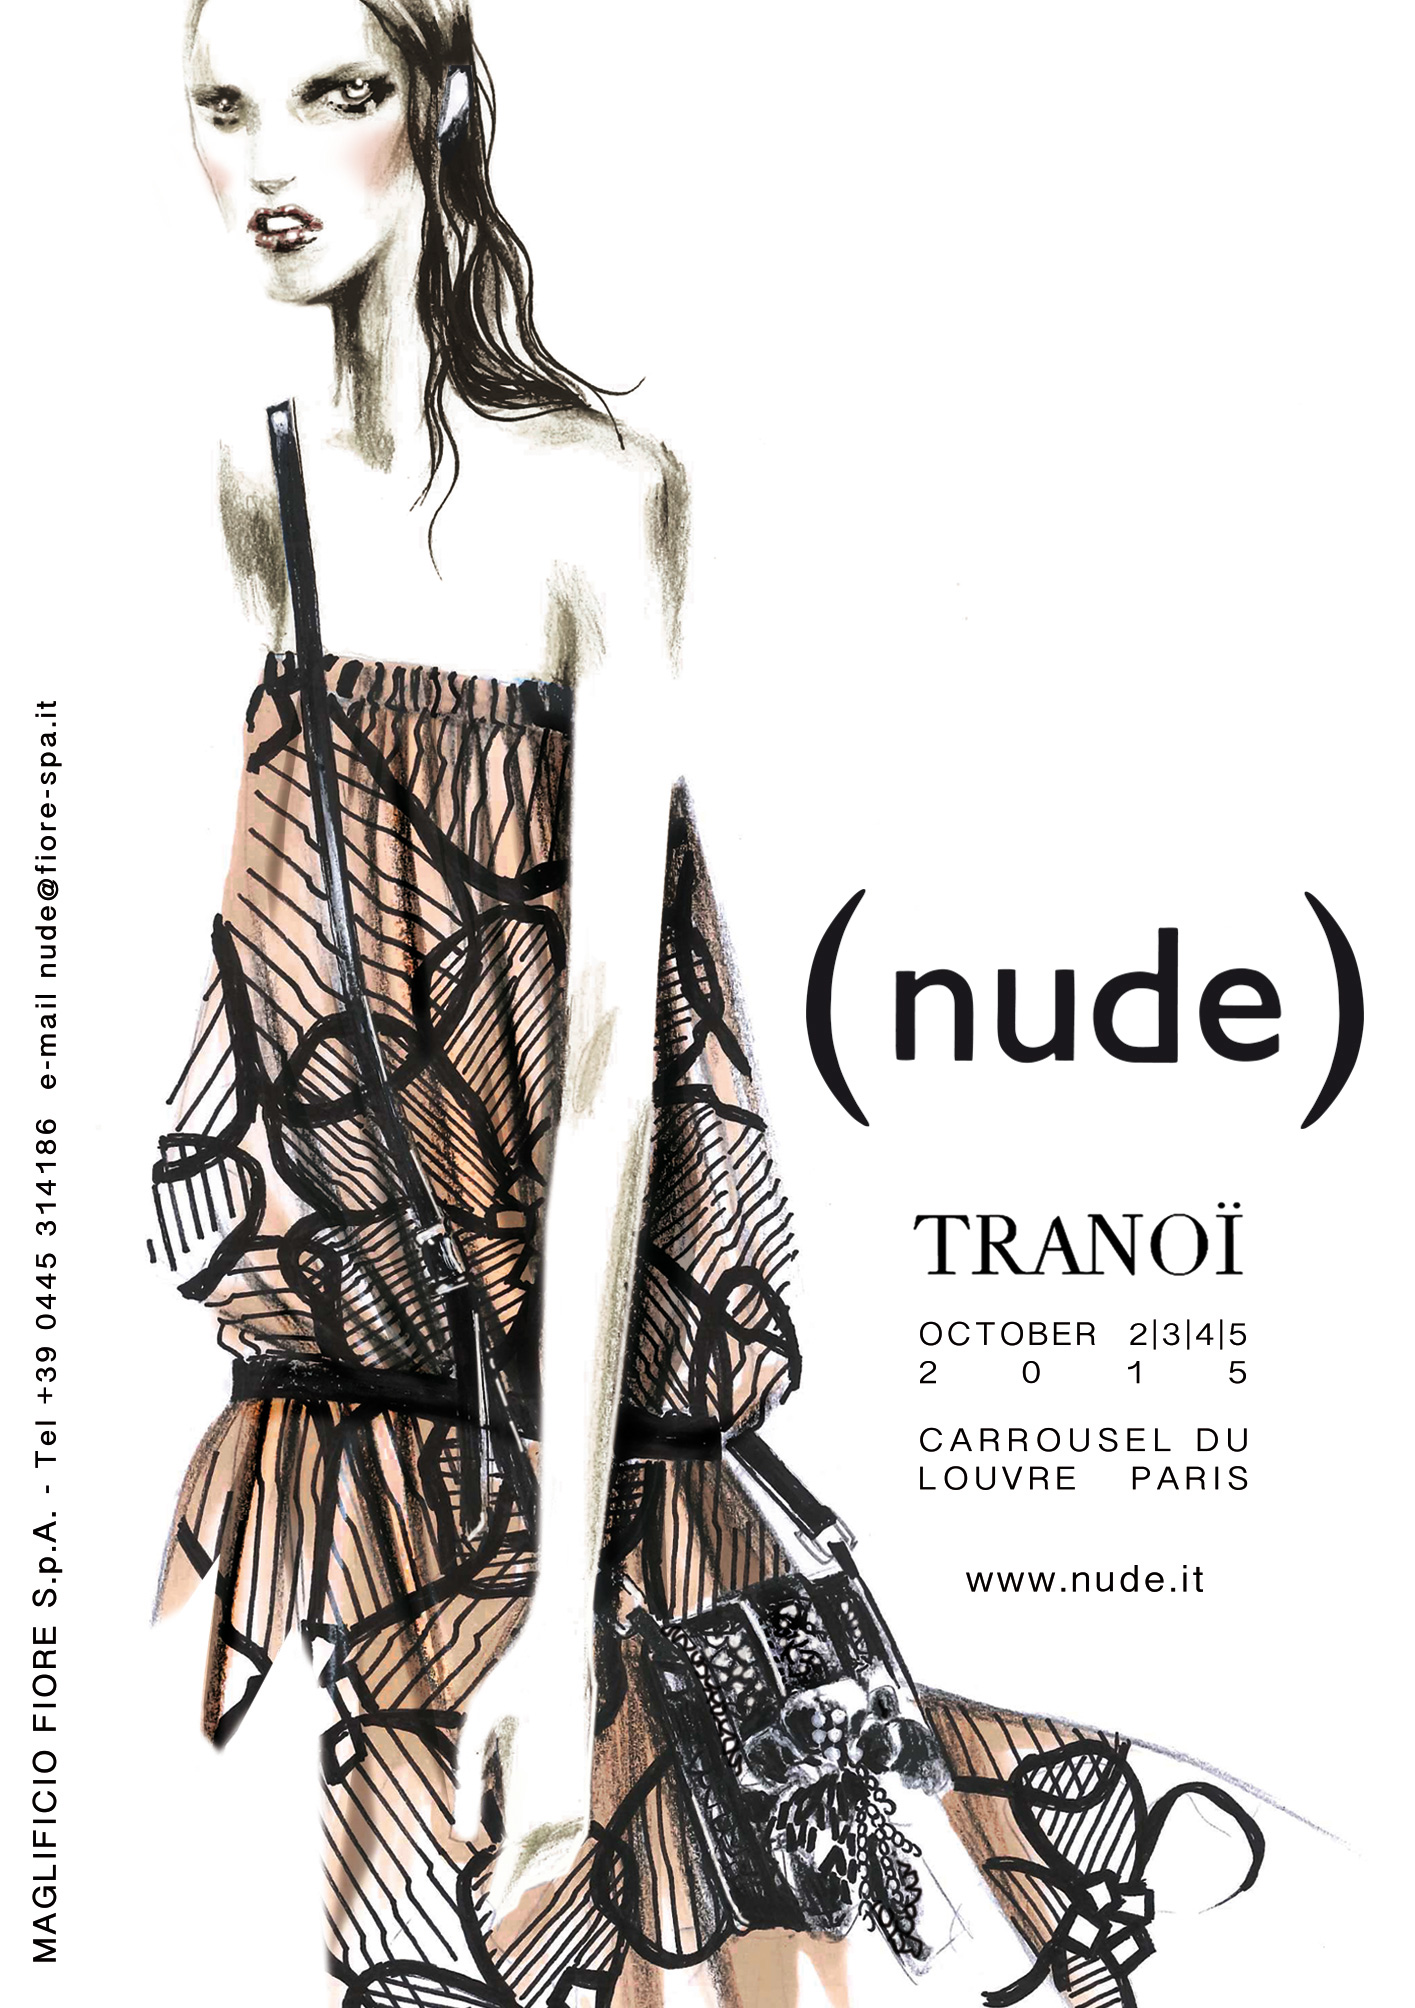 Nude at TRANOI